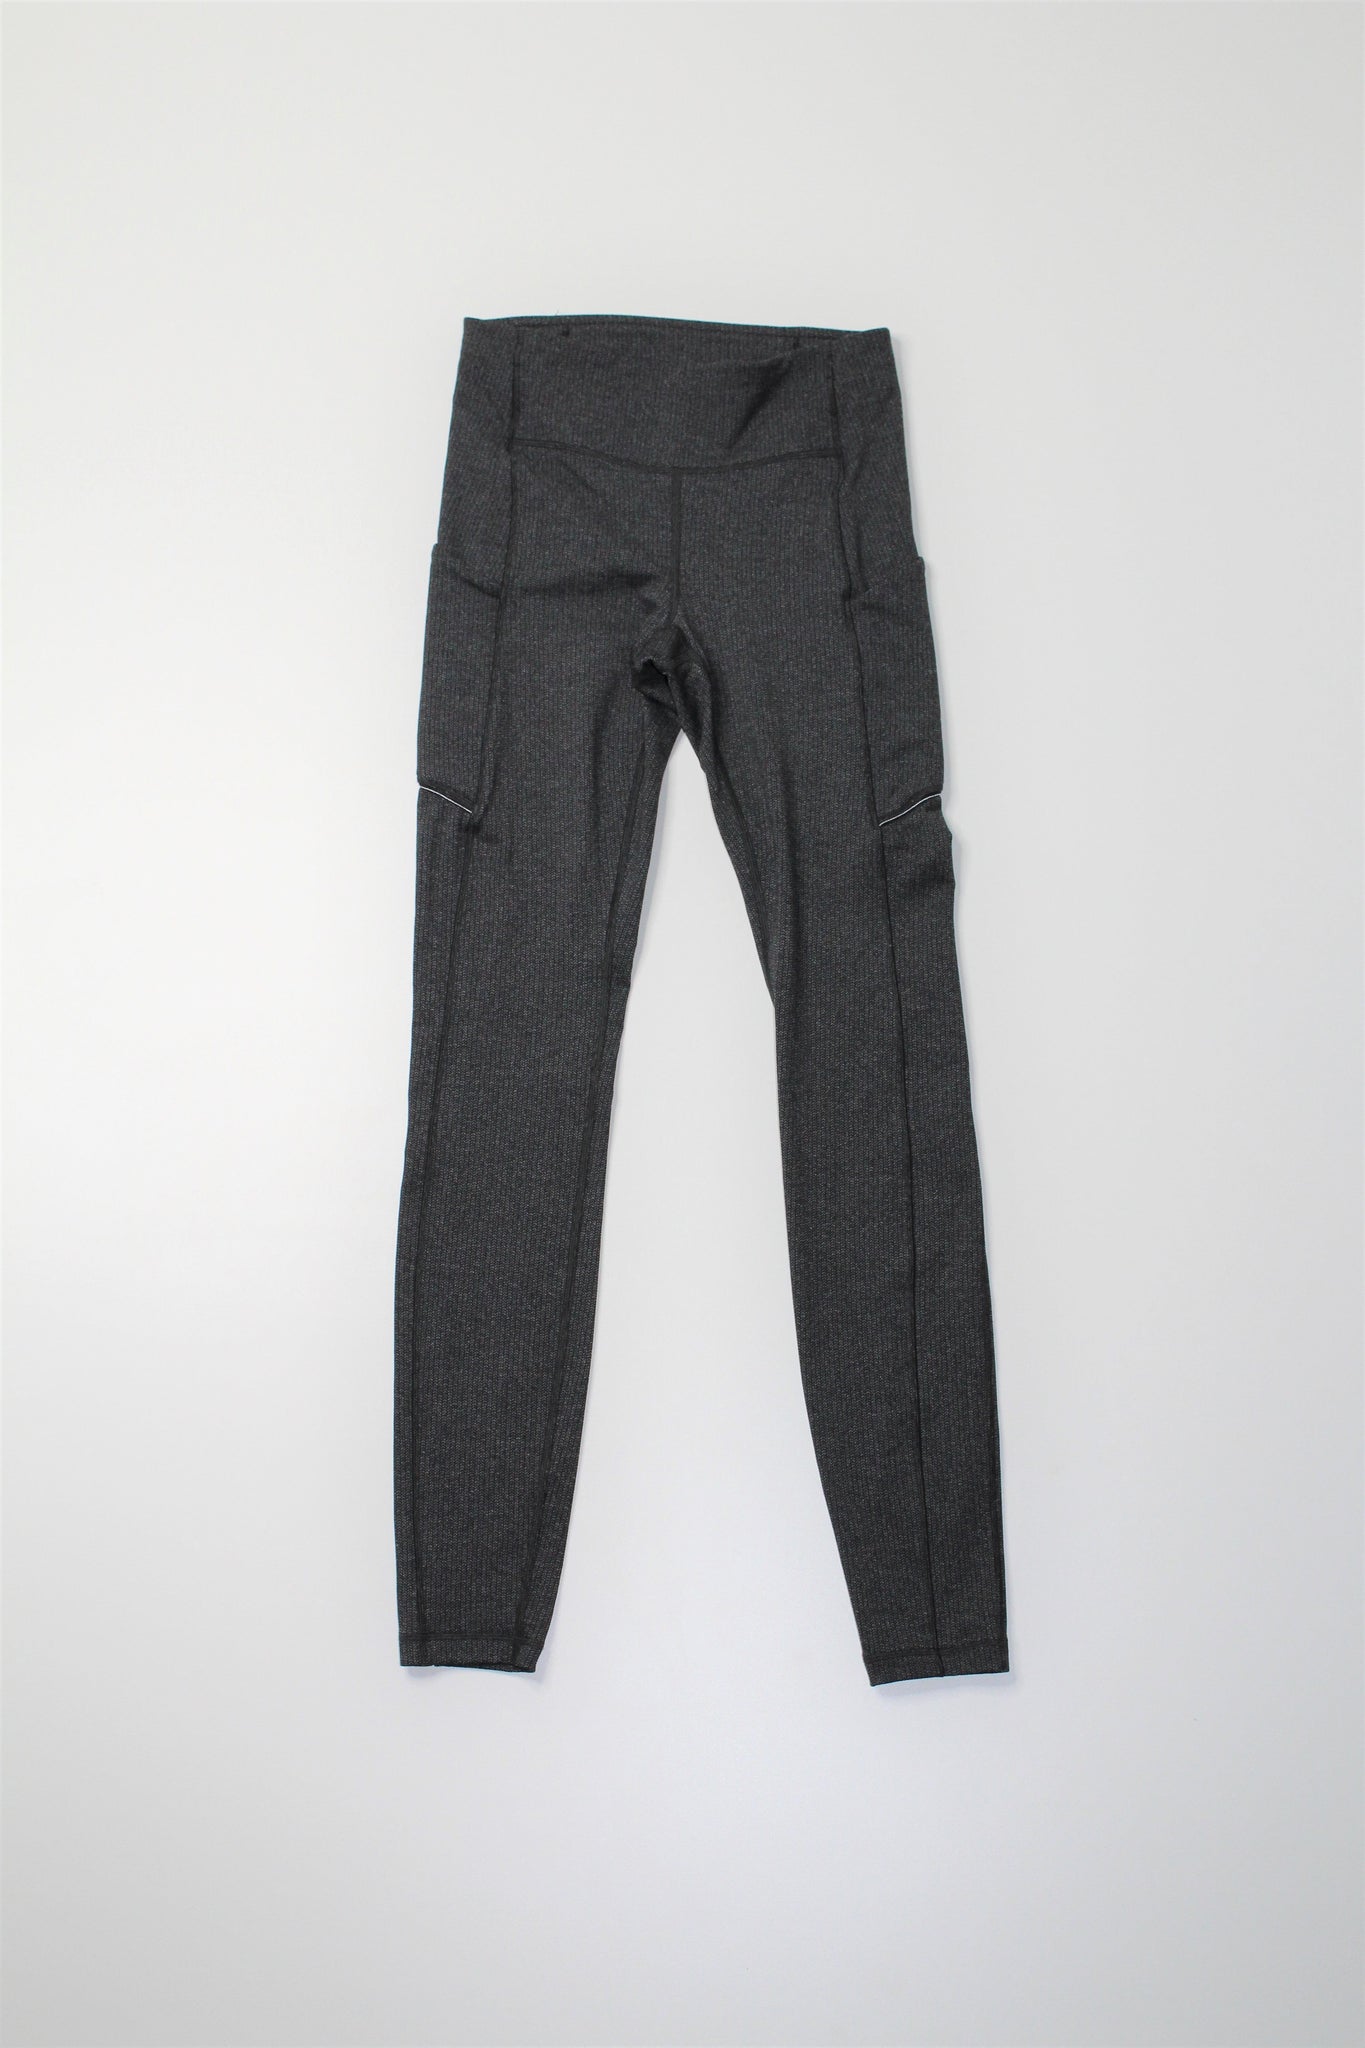 Lululemon variegated knit heathered black speed up tight, size 4